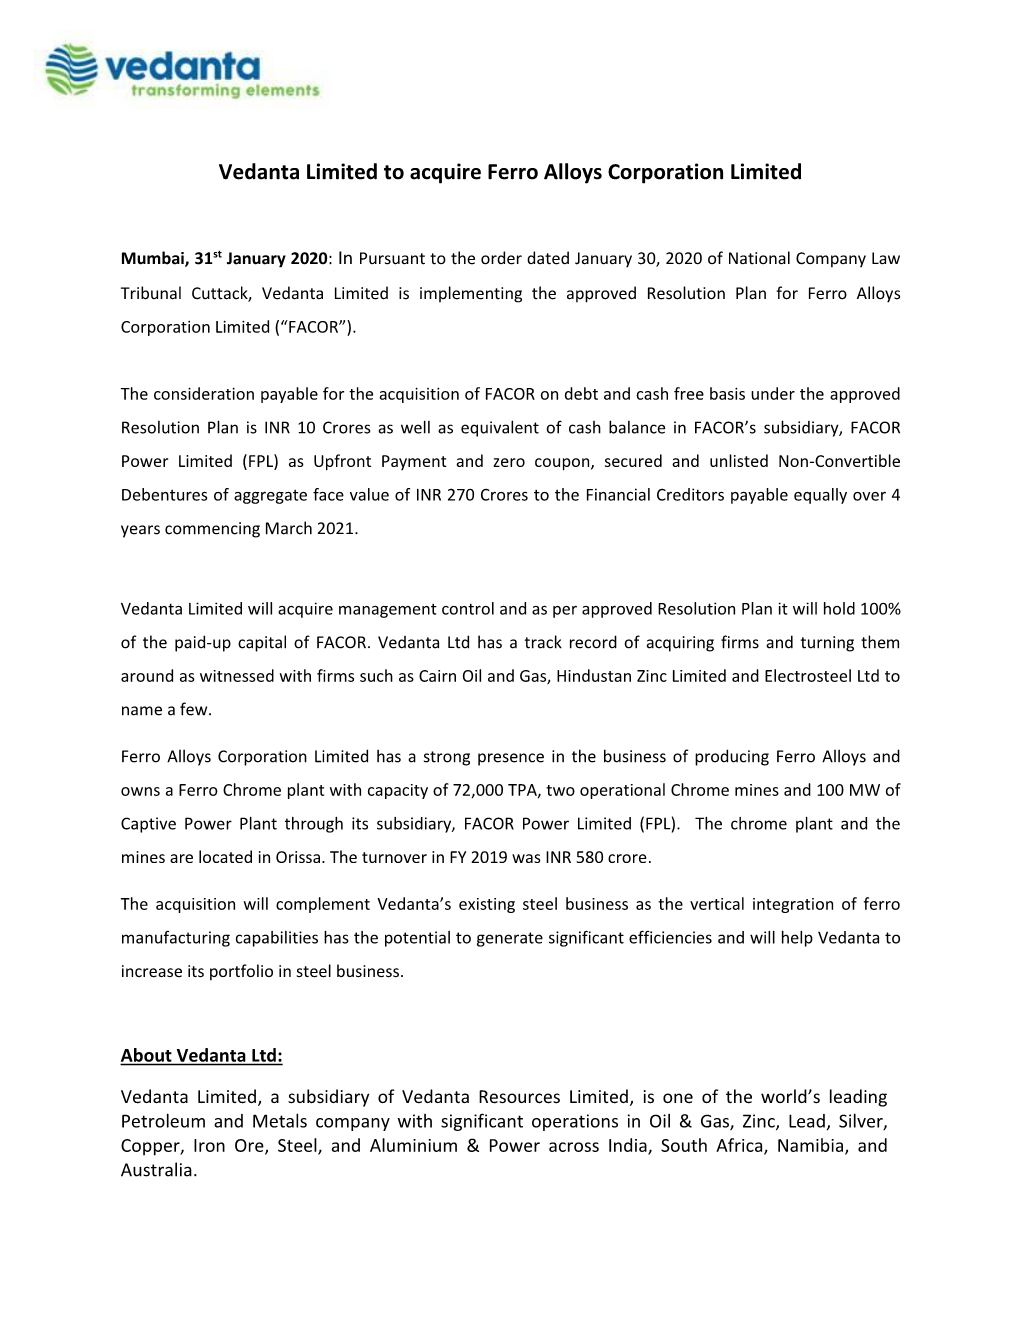 Vedanta Limited to Acquire Ferro Alloys Corporation Limited